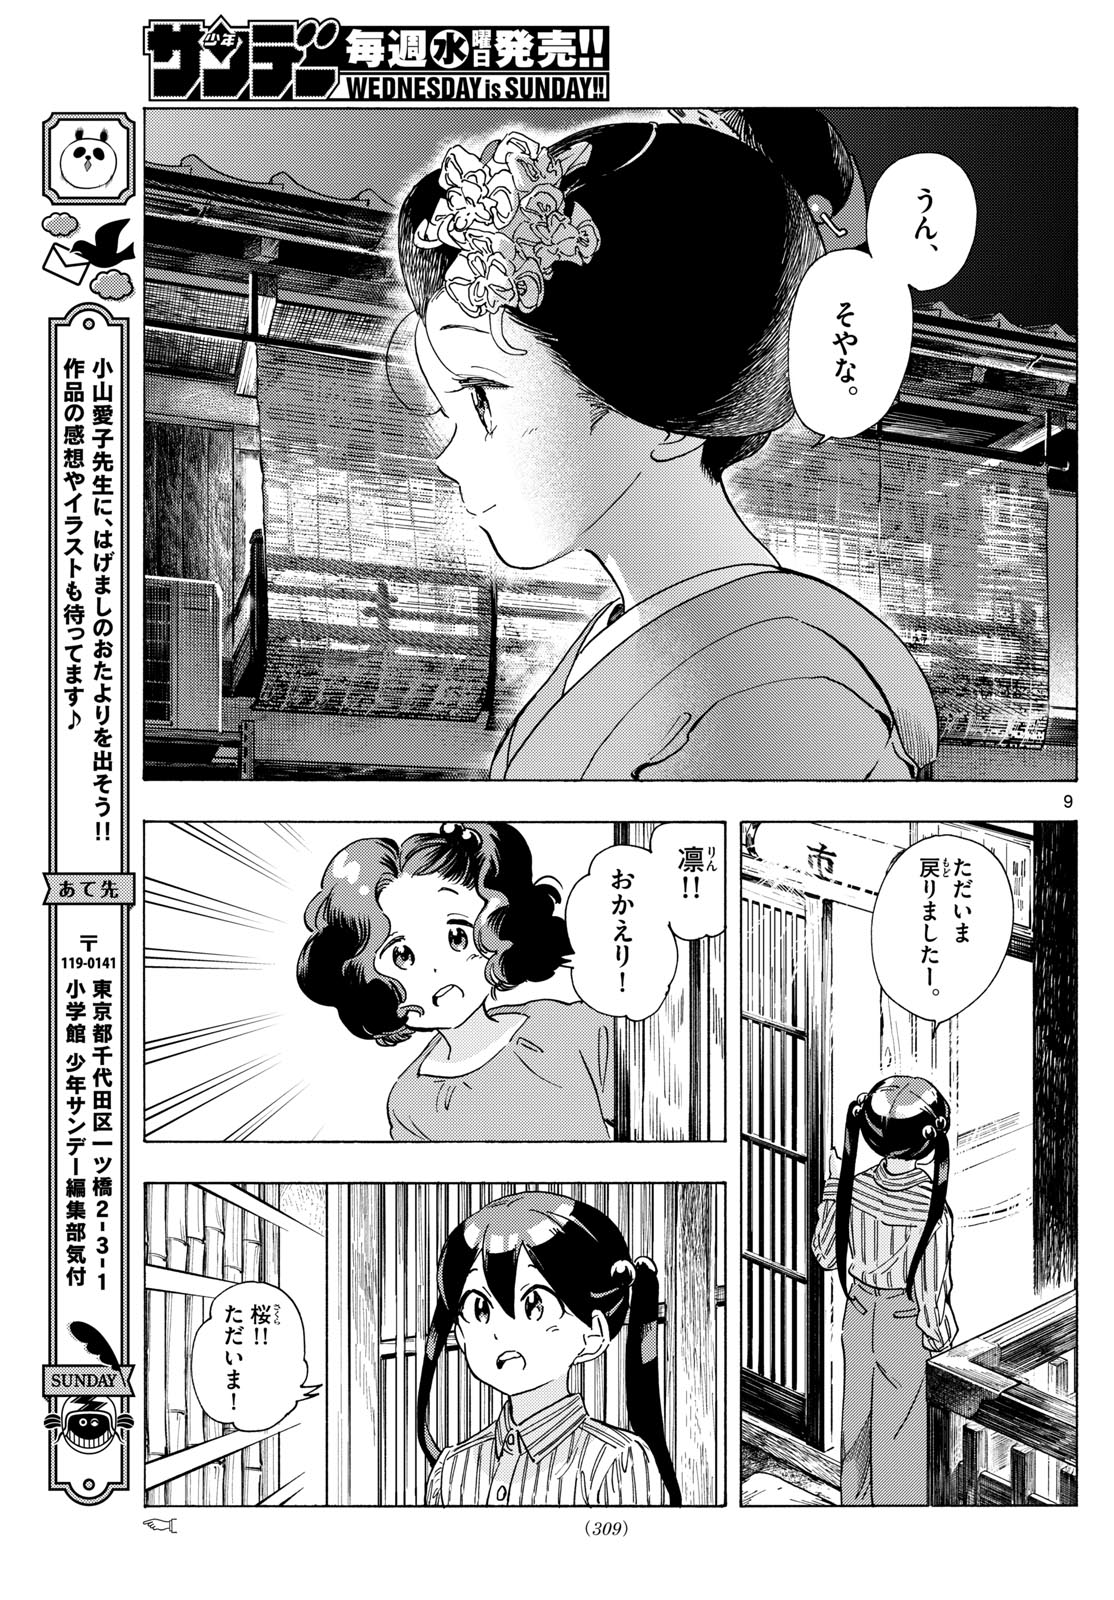 Maiko-san Chi no Makanai-san - Chapter 290 - Page 9